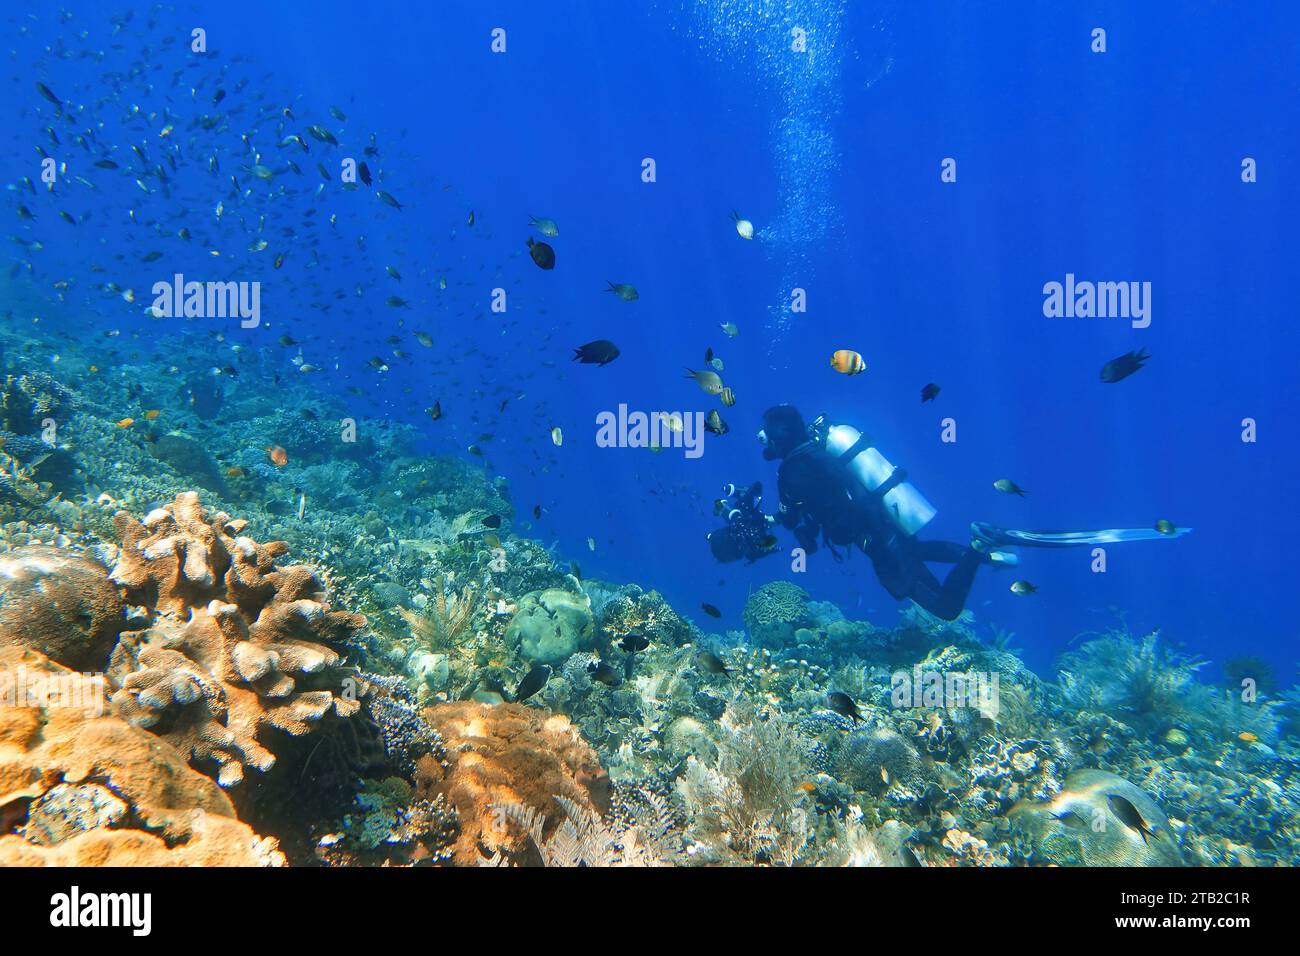 Indonesien Alor Island - Meeresleben Korallenriff mit tropischen Fischen - Tauchen Stockfoto